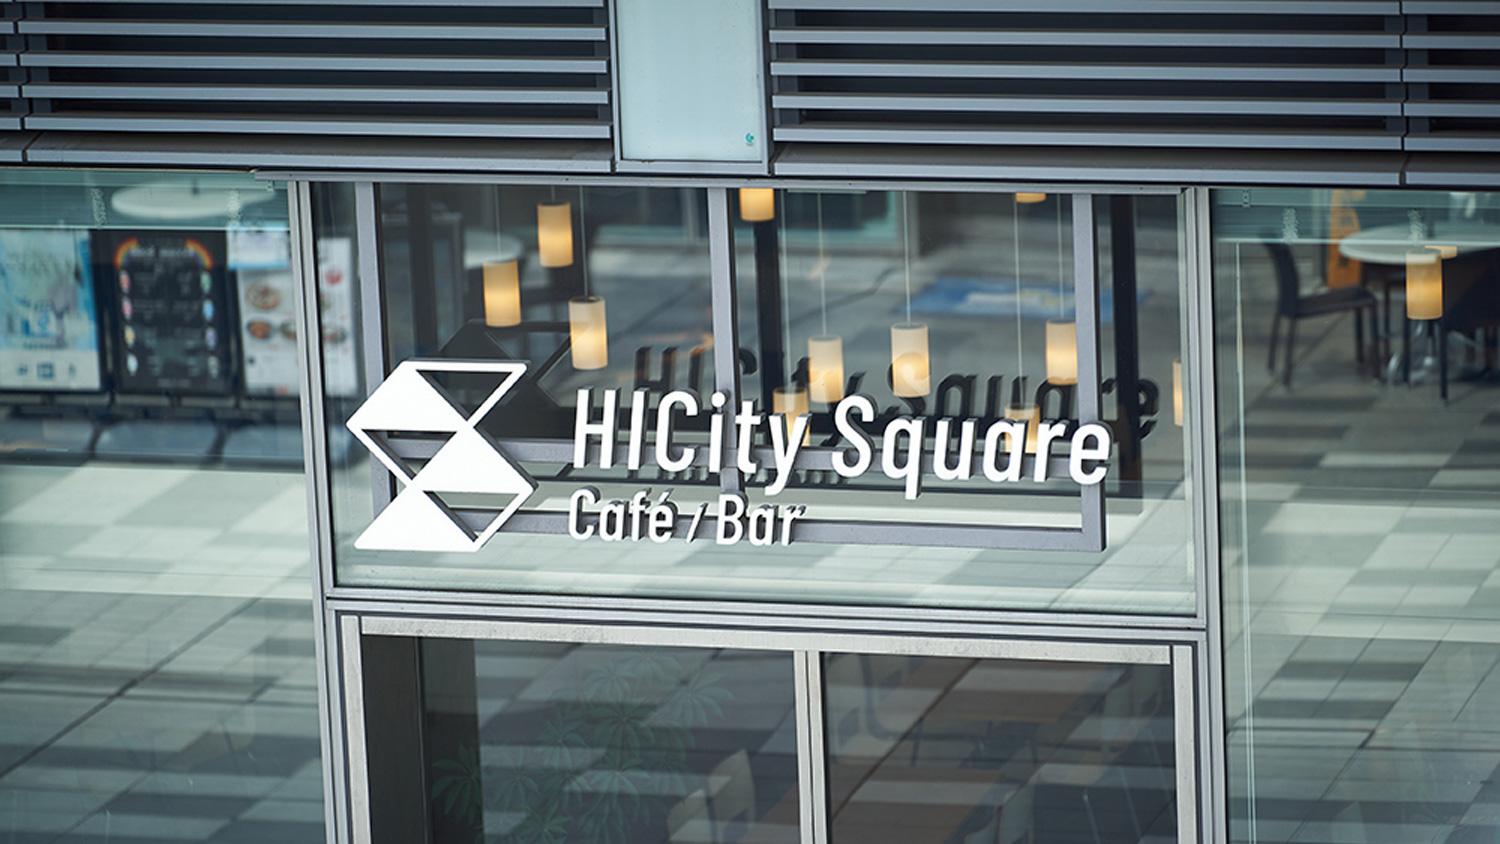 HICity Square Cafe / Barのアイキャッチ画像